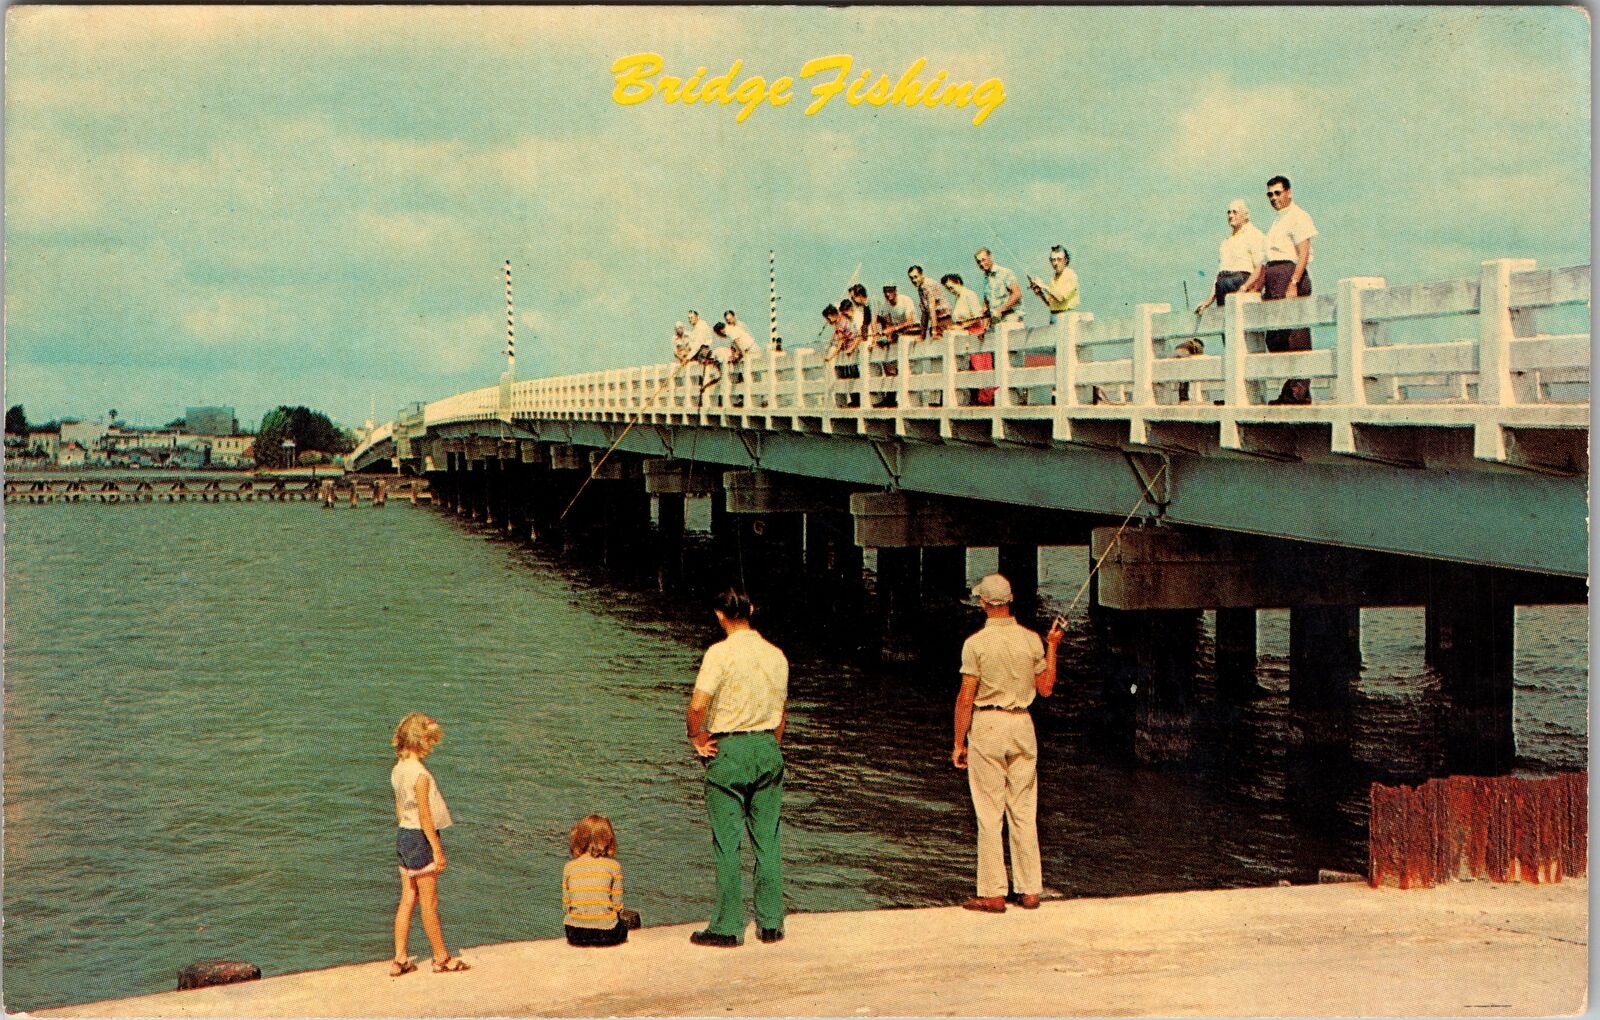 NY-New York, Bridge Fishing, Scenic View, Vintage Postcard